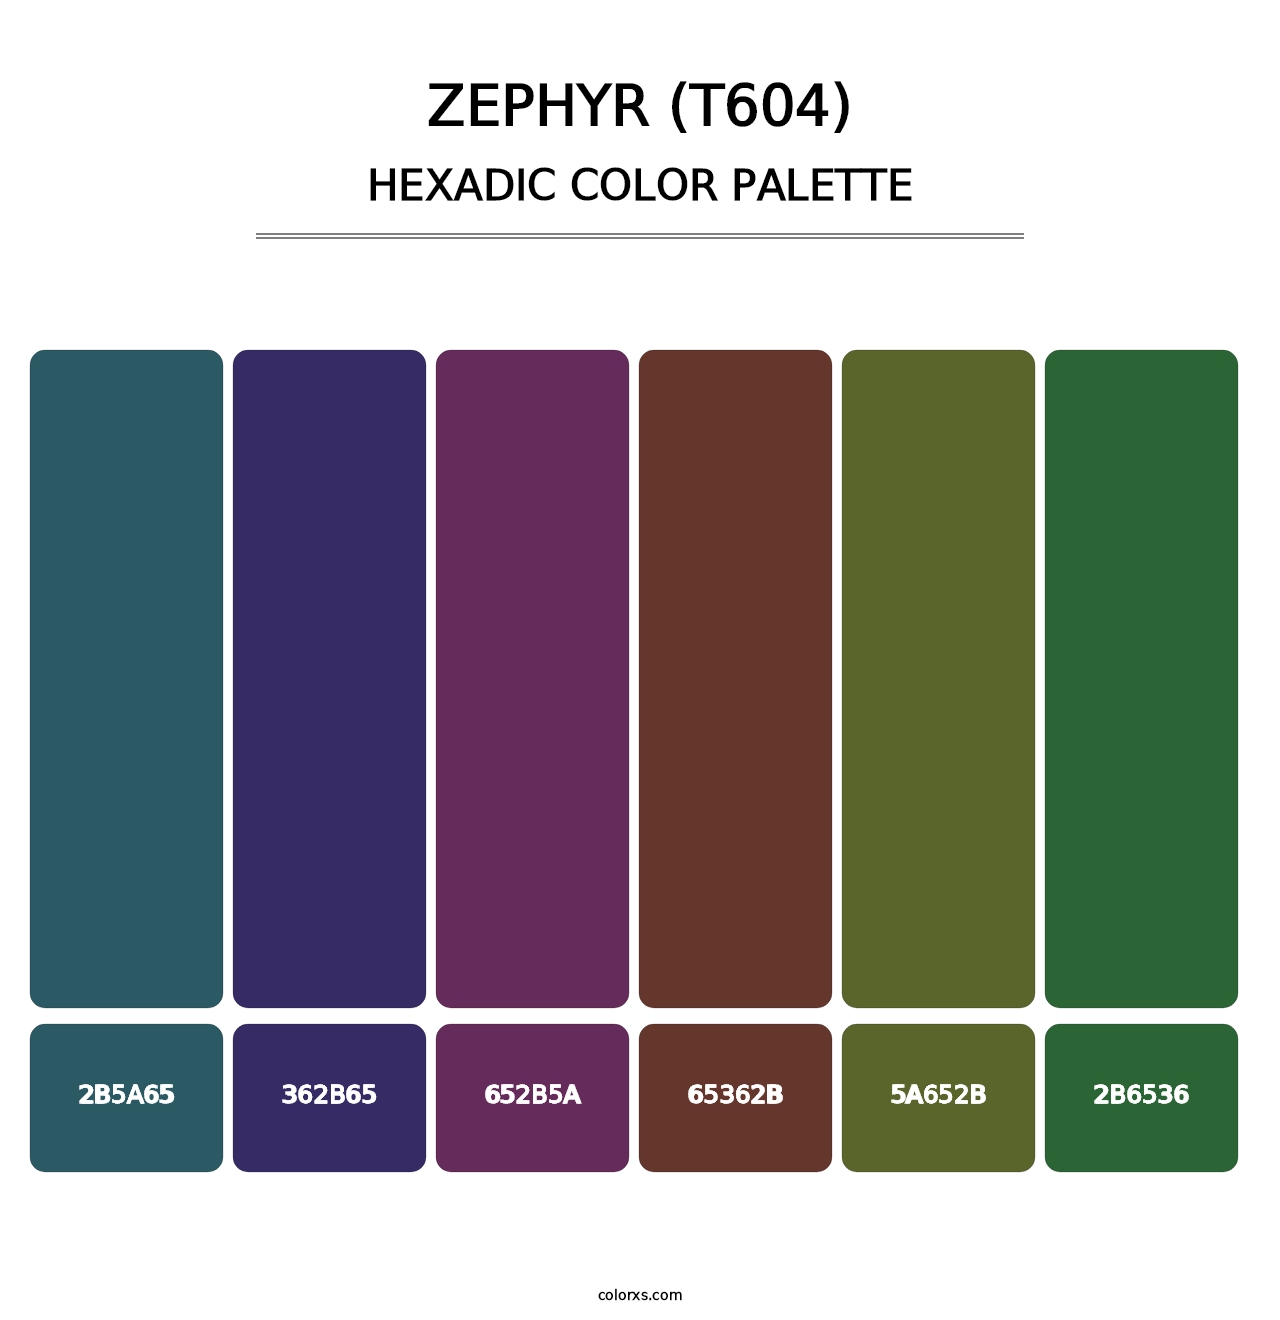 Zephyr (T604) - Hexadic Color Palette